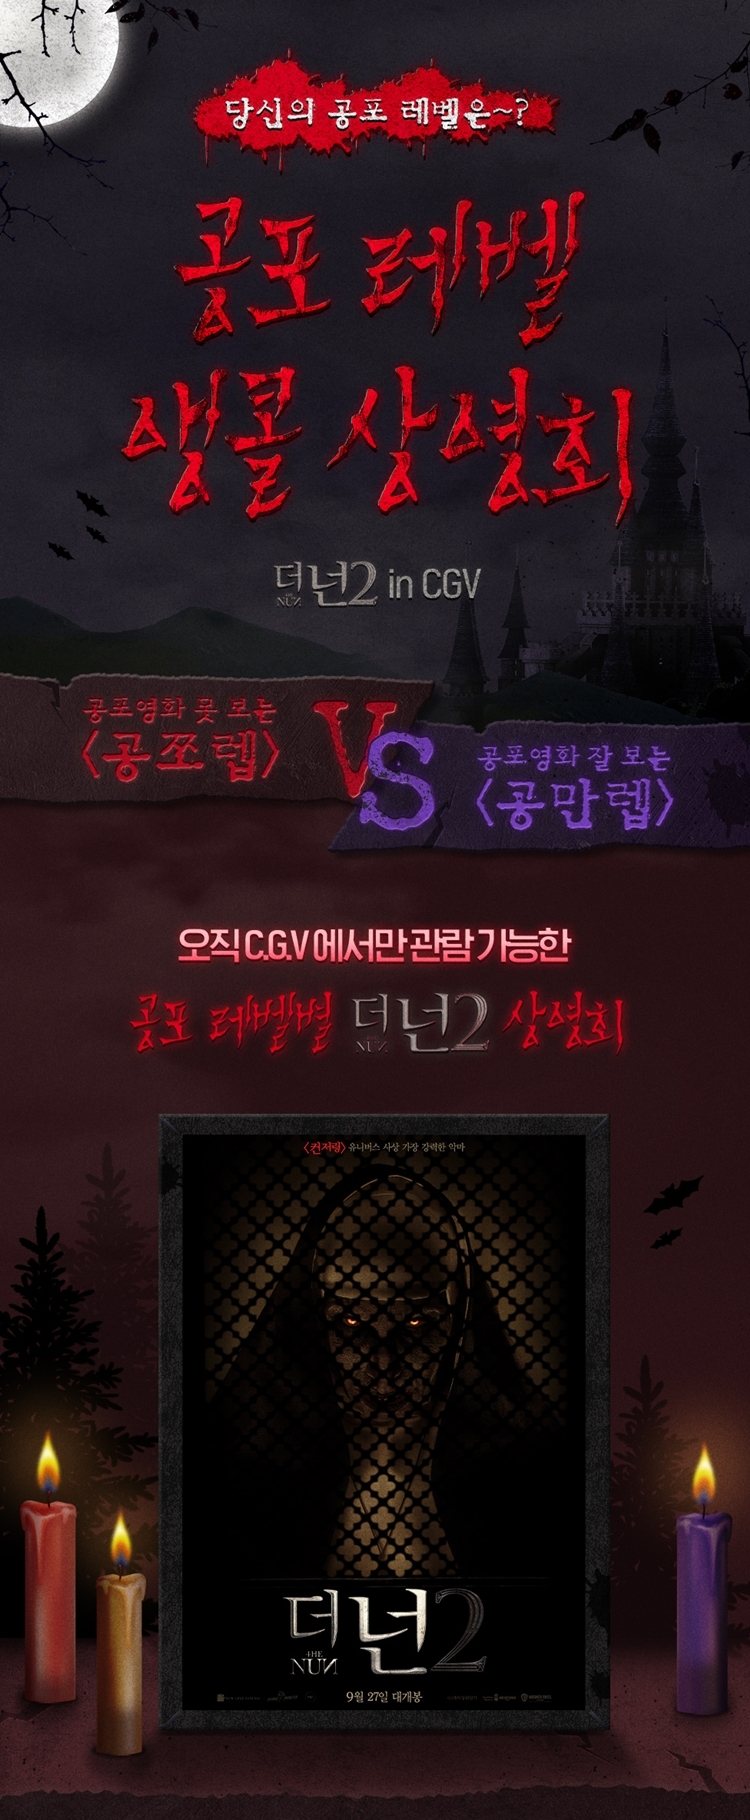 [IT이슈] CGV '더 넌2' 공포(담)력 레벨 상영회’ 진행 外